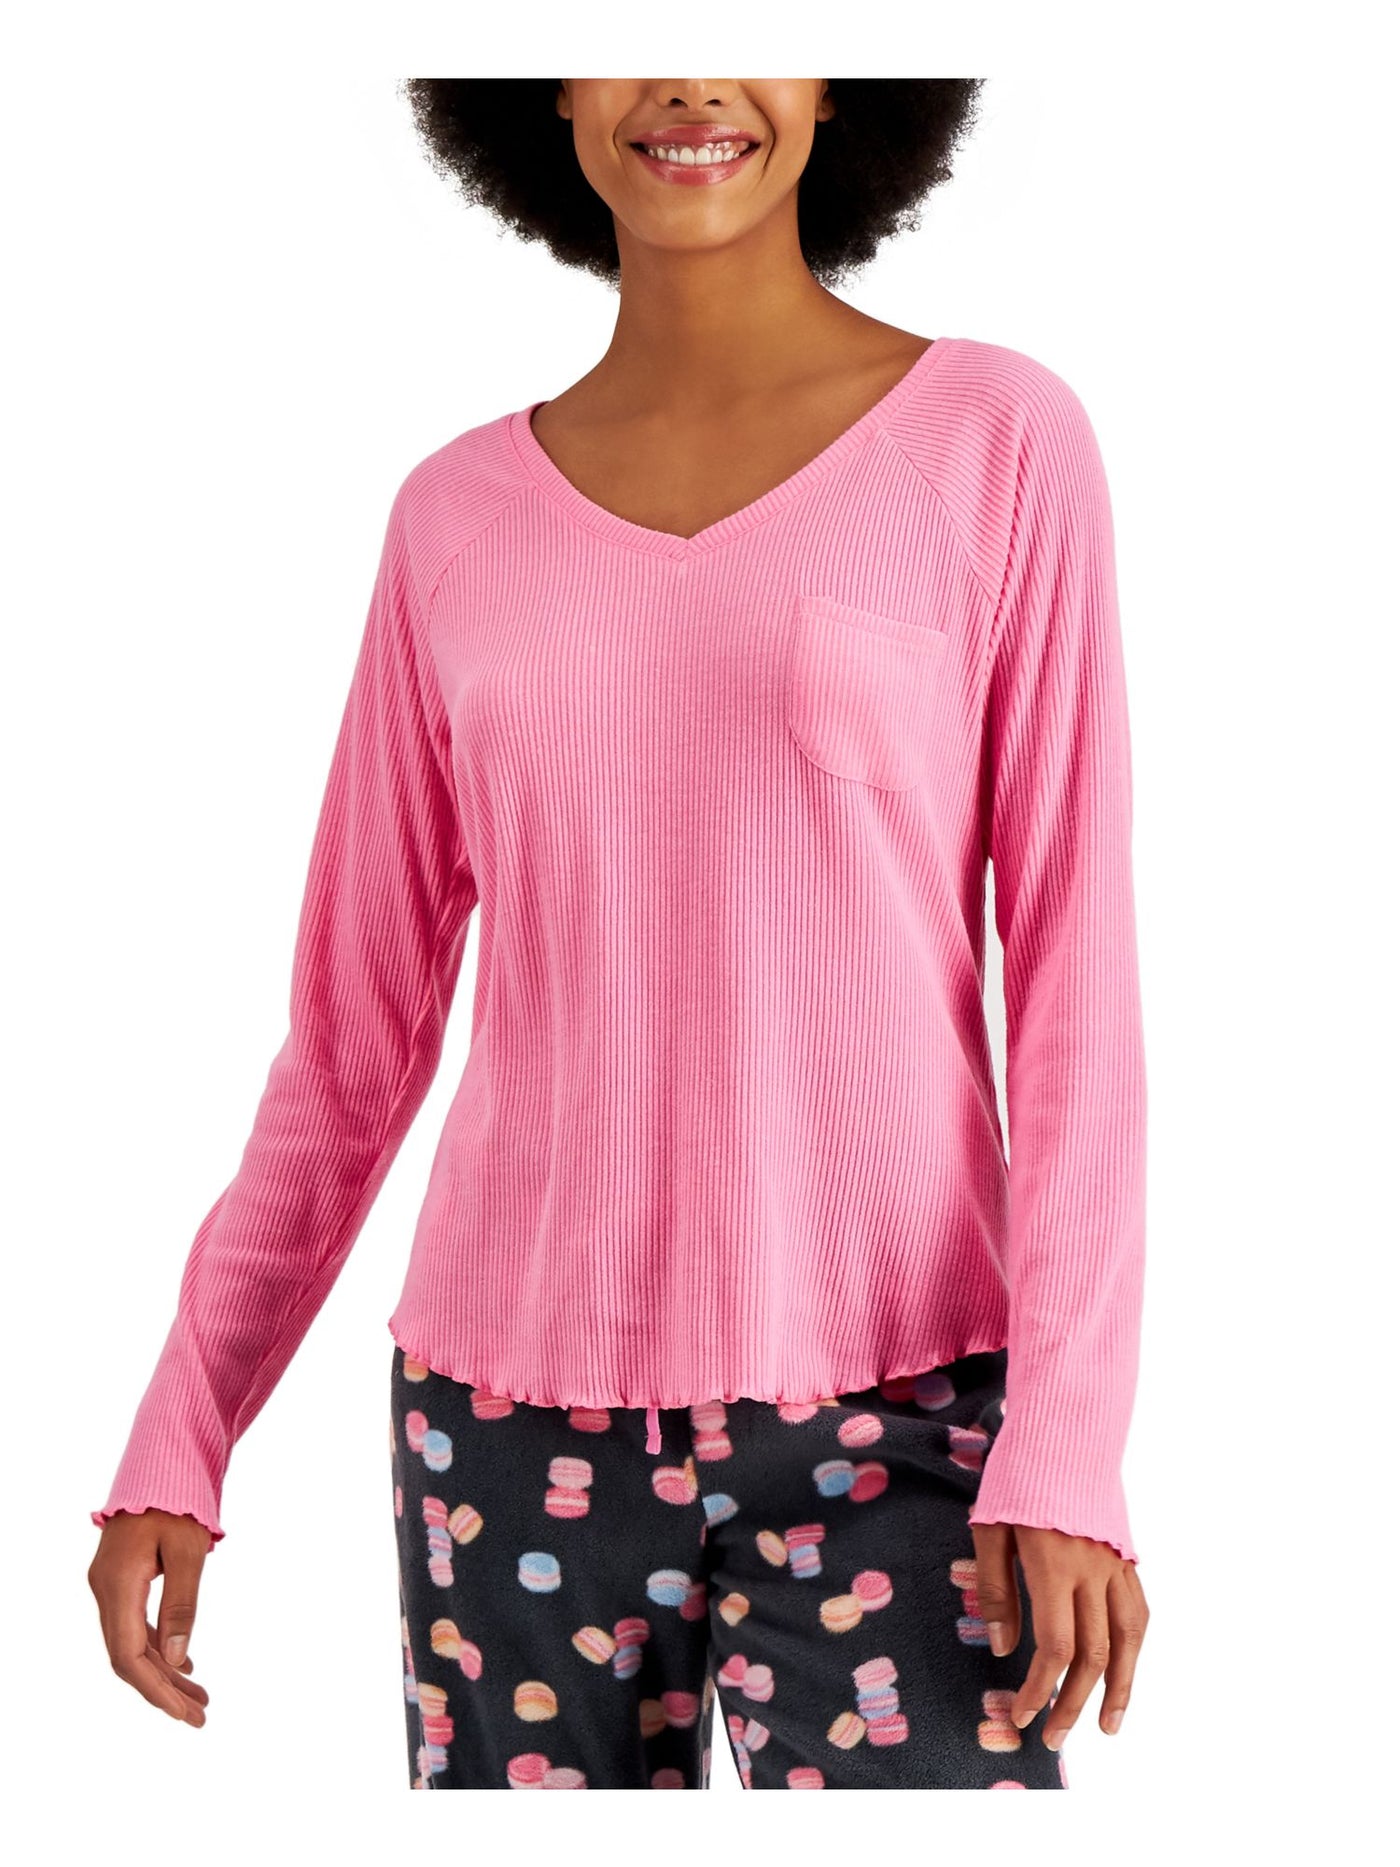 JENNI Intimates Pink Chest Pocket Sleep Shirt Pajama Top XS